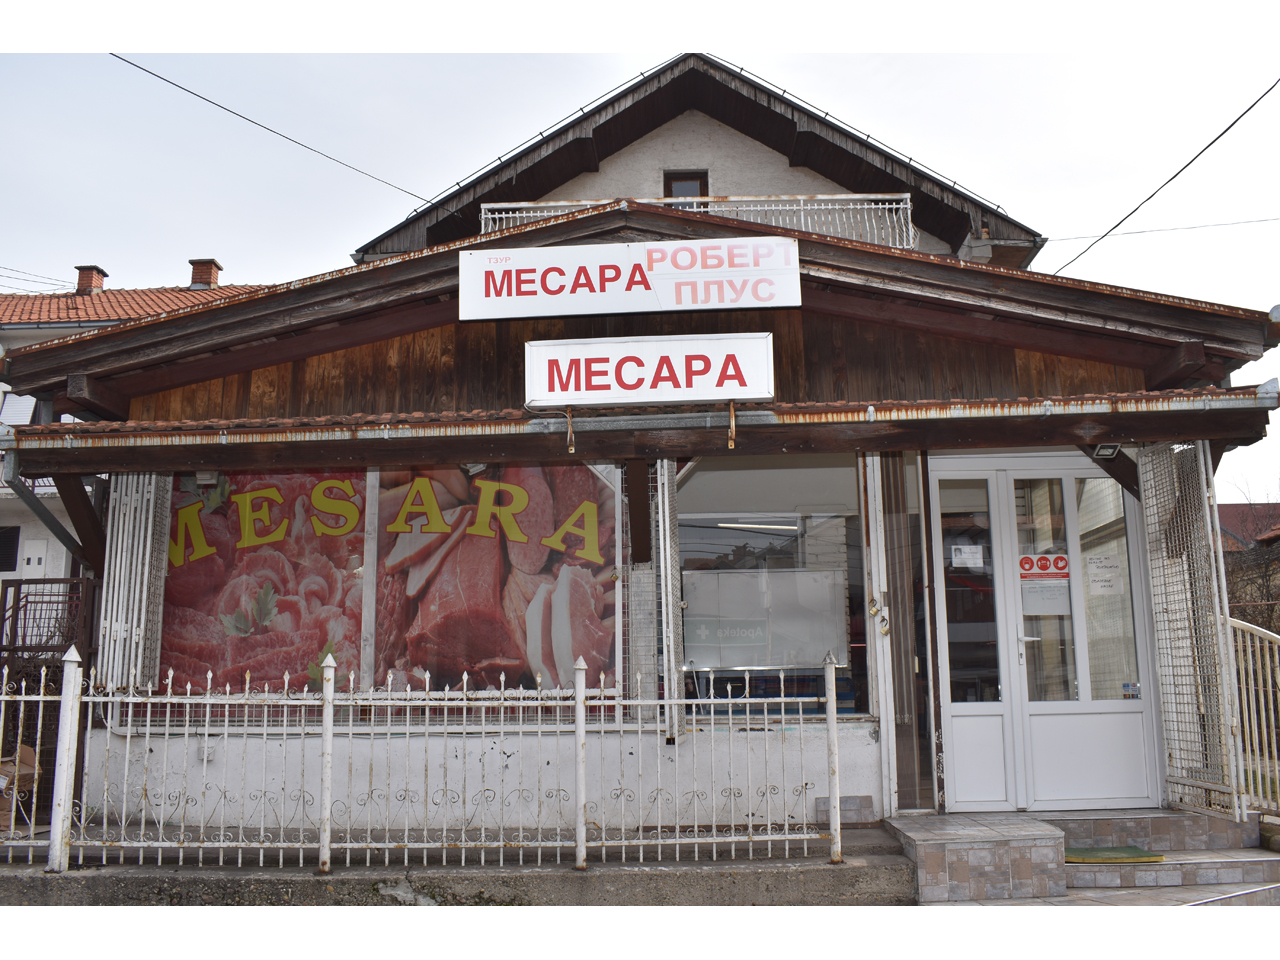 MESARA ROBERT PLUS Mesare, prerađevine od mesa Beograd